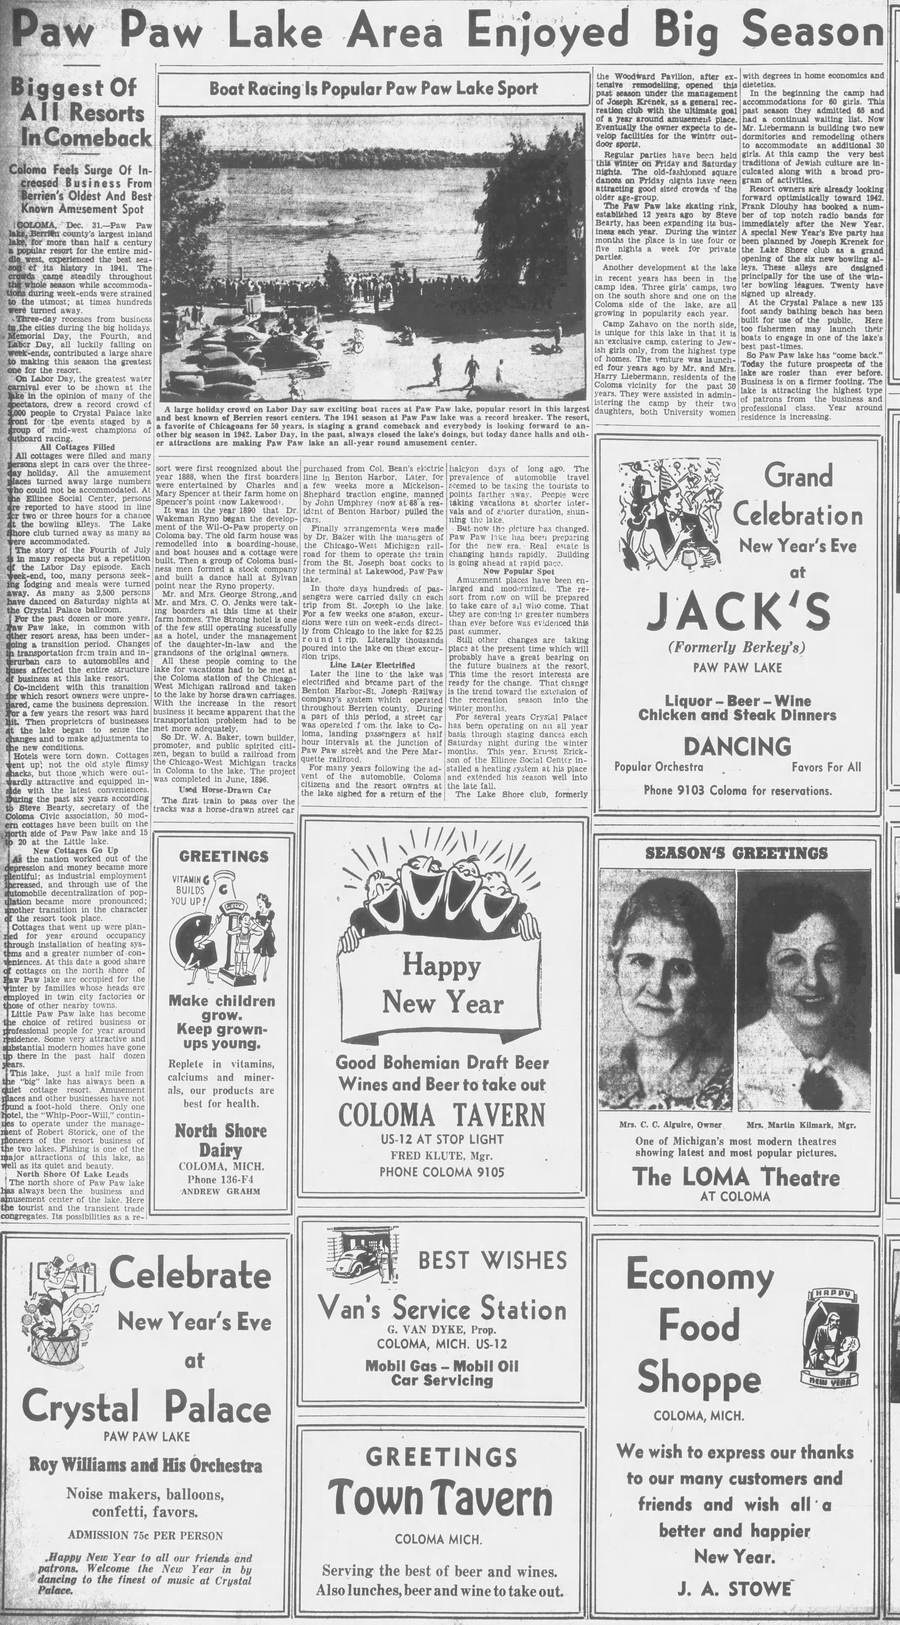 Crystal Palace Ballroom at Paw Paw Lake - THE NEWS PALLADIUM WED DEC 31 1941